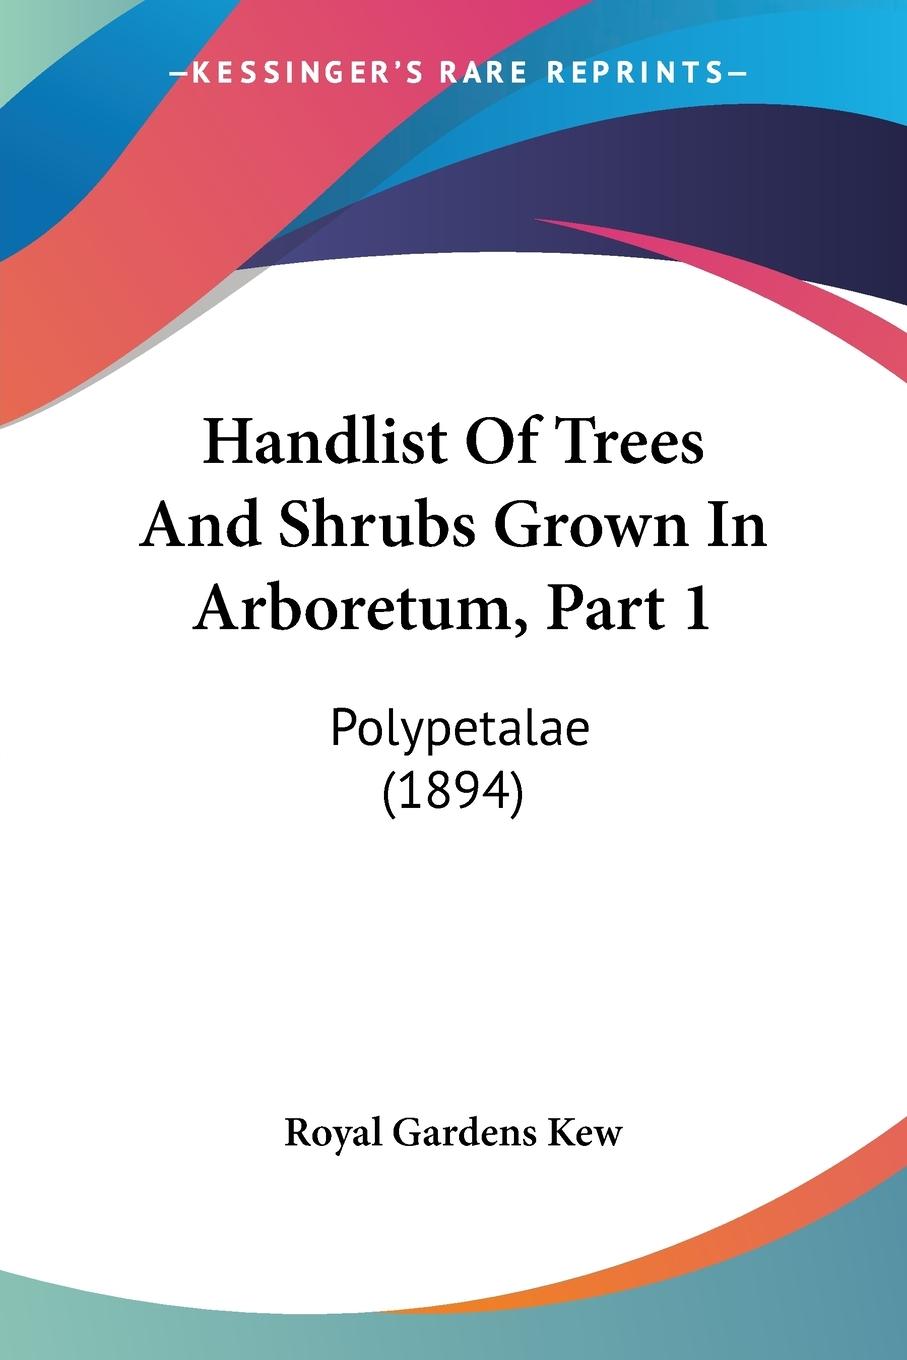 Handlist Of Trees And Shrubs Grown In Arboretum, Part 1 - Royal Gardens Kew